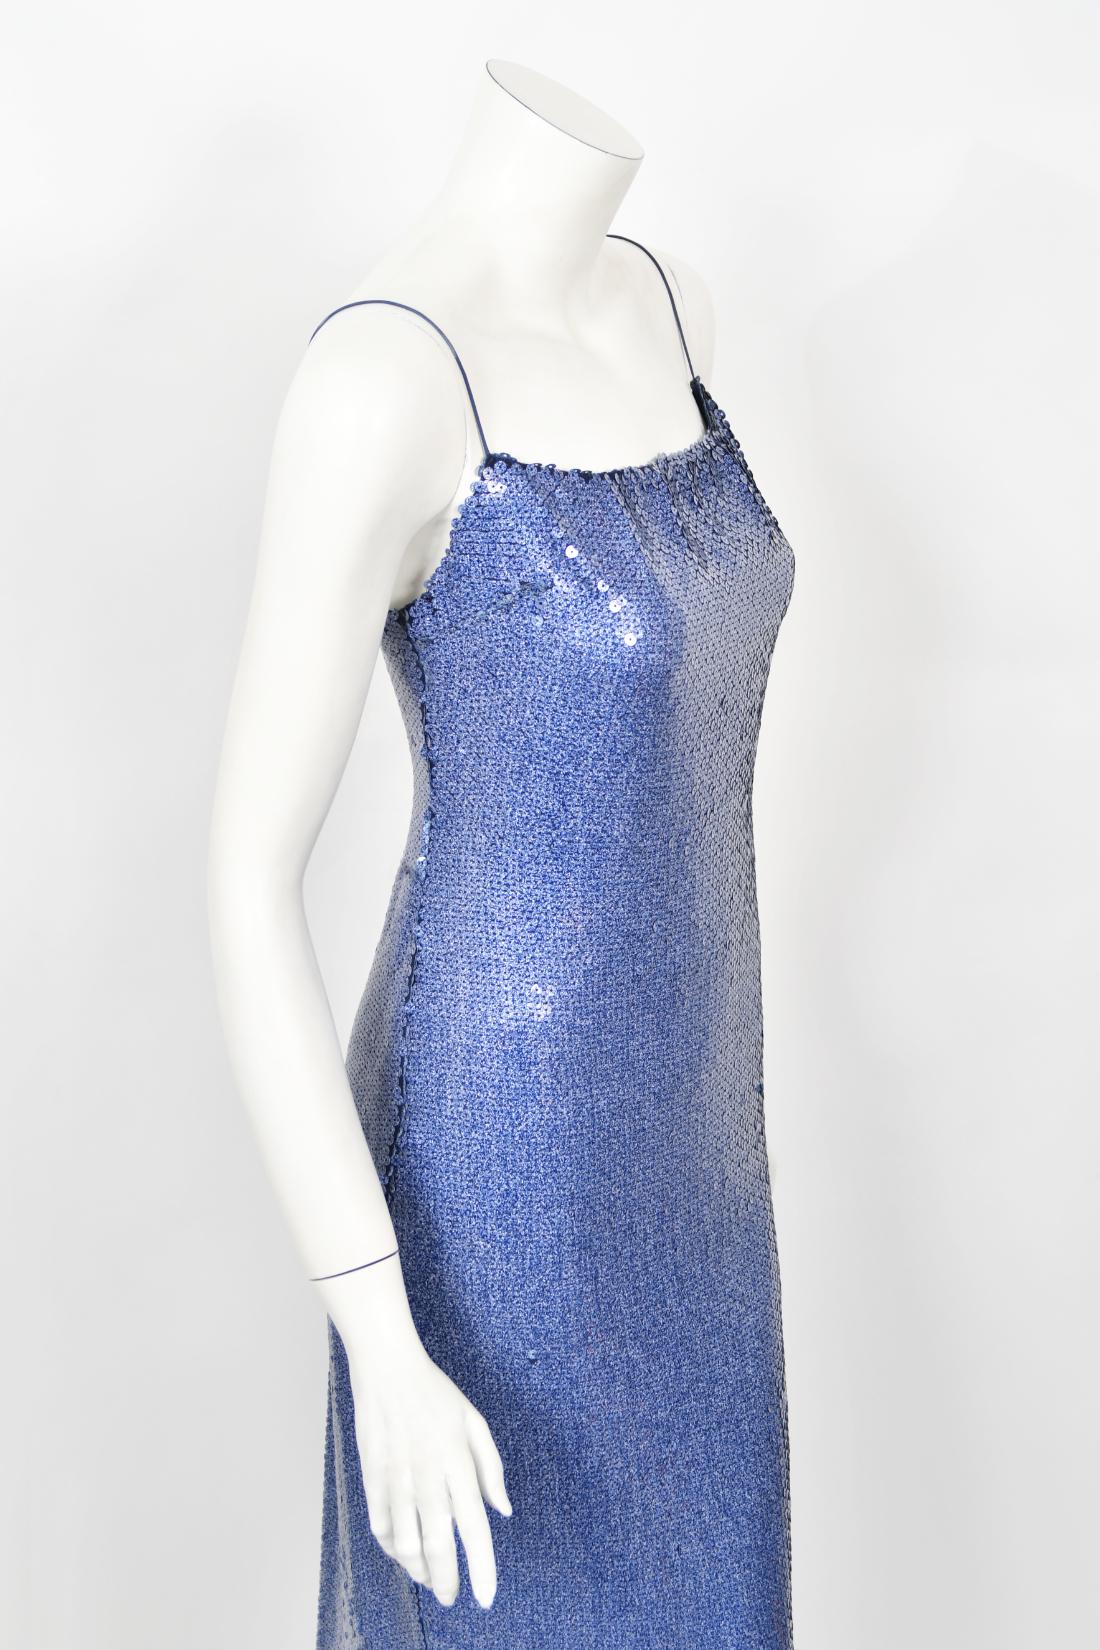 2000 Christian Dior by John Galliano Fully-Sequin Ocean Blue Bias-Cut Slip Gown  8